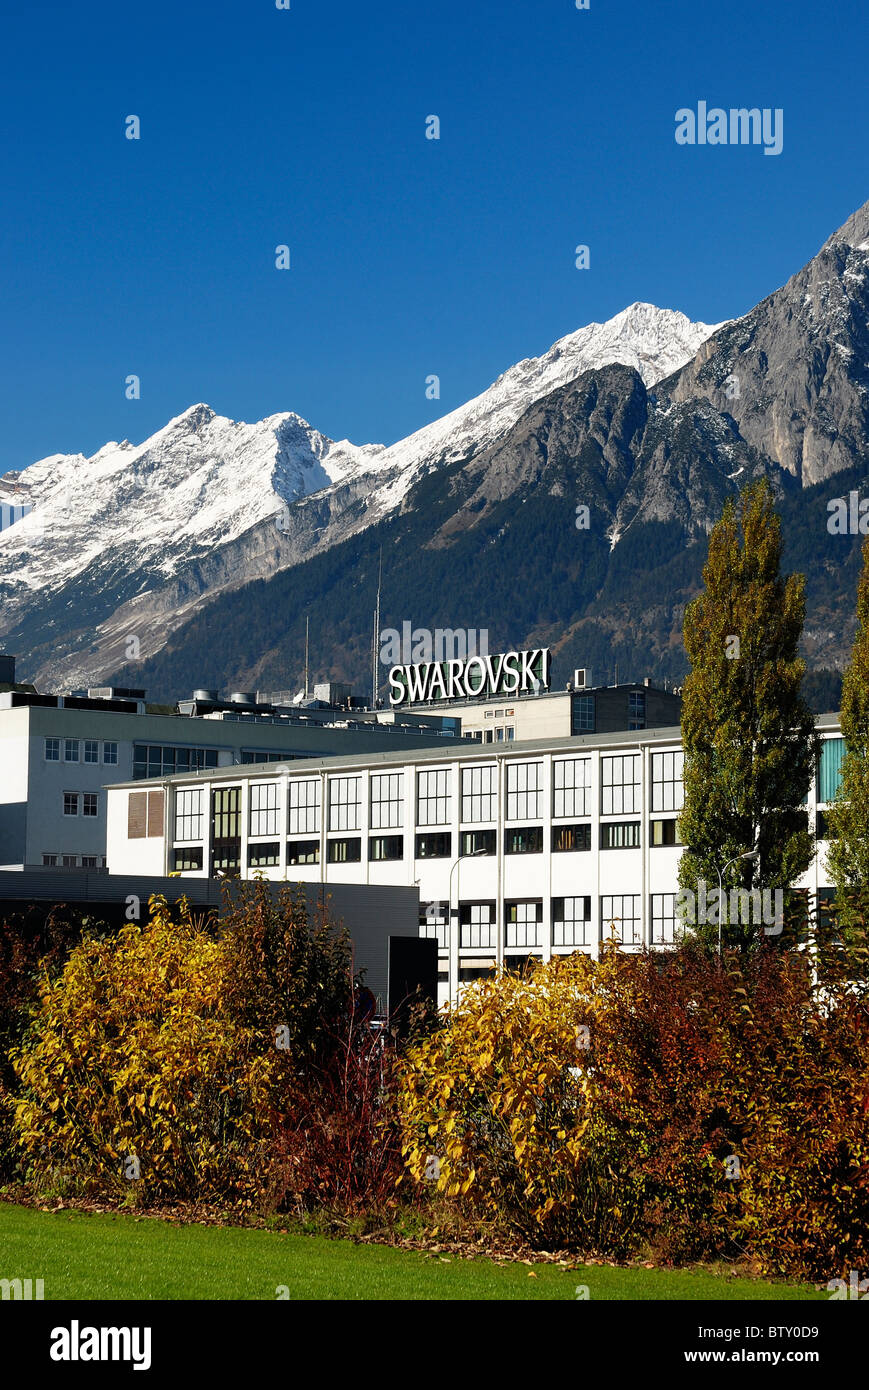 Mondi di Cristallo Swarovski wattens Tirol Austria kristallwelten Foto  stock - Alamy